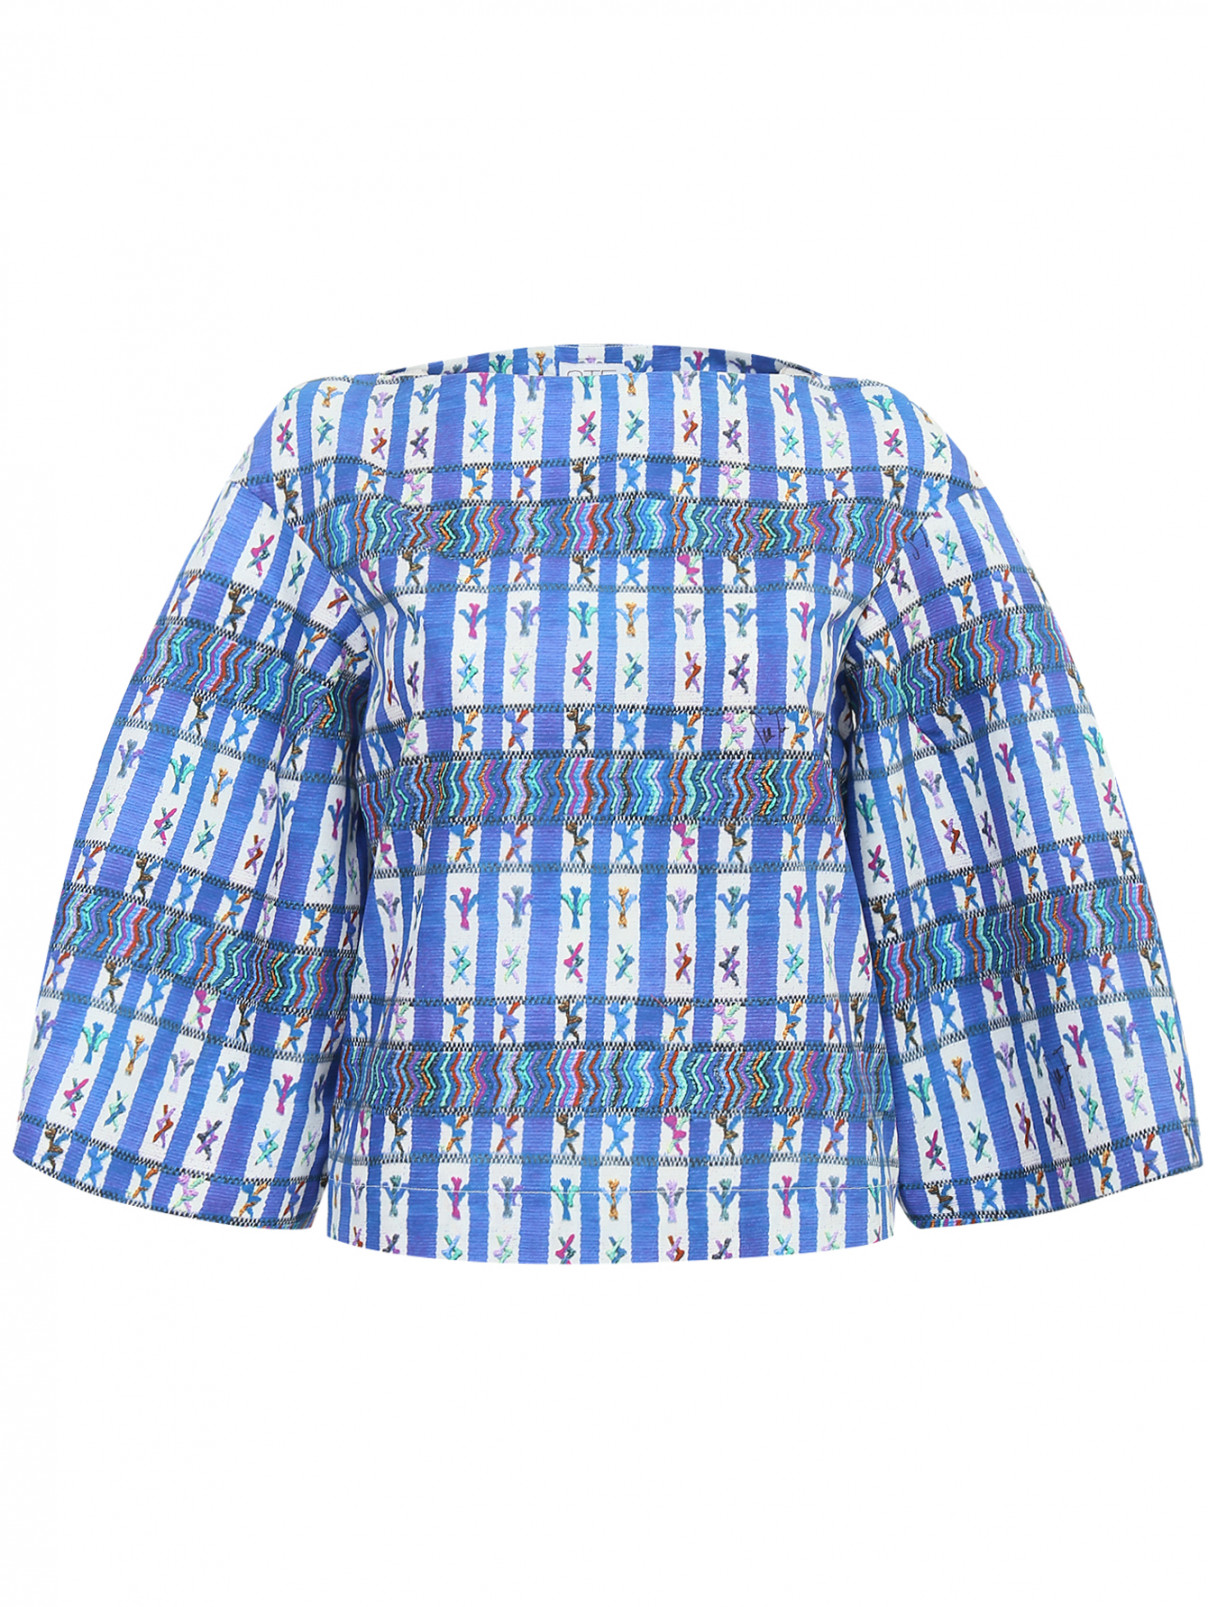 Блуза из хлопка с узором Stella Jean  –  Общий вид  – Цвет:  Узор